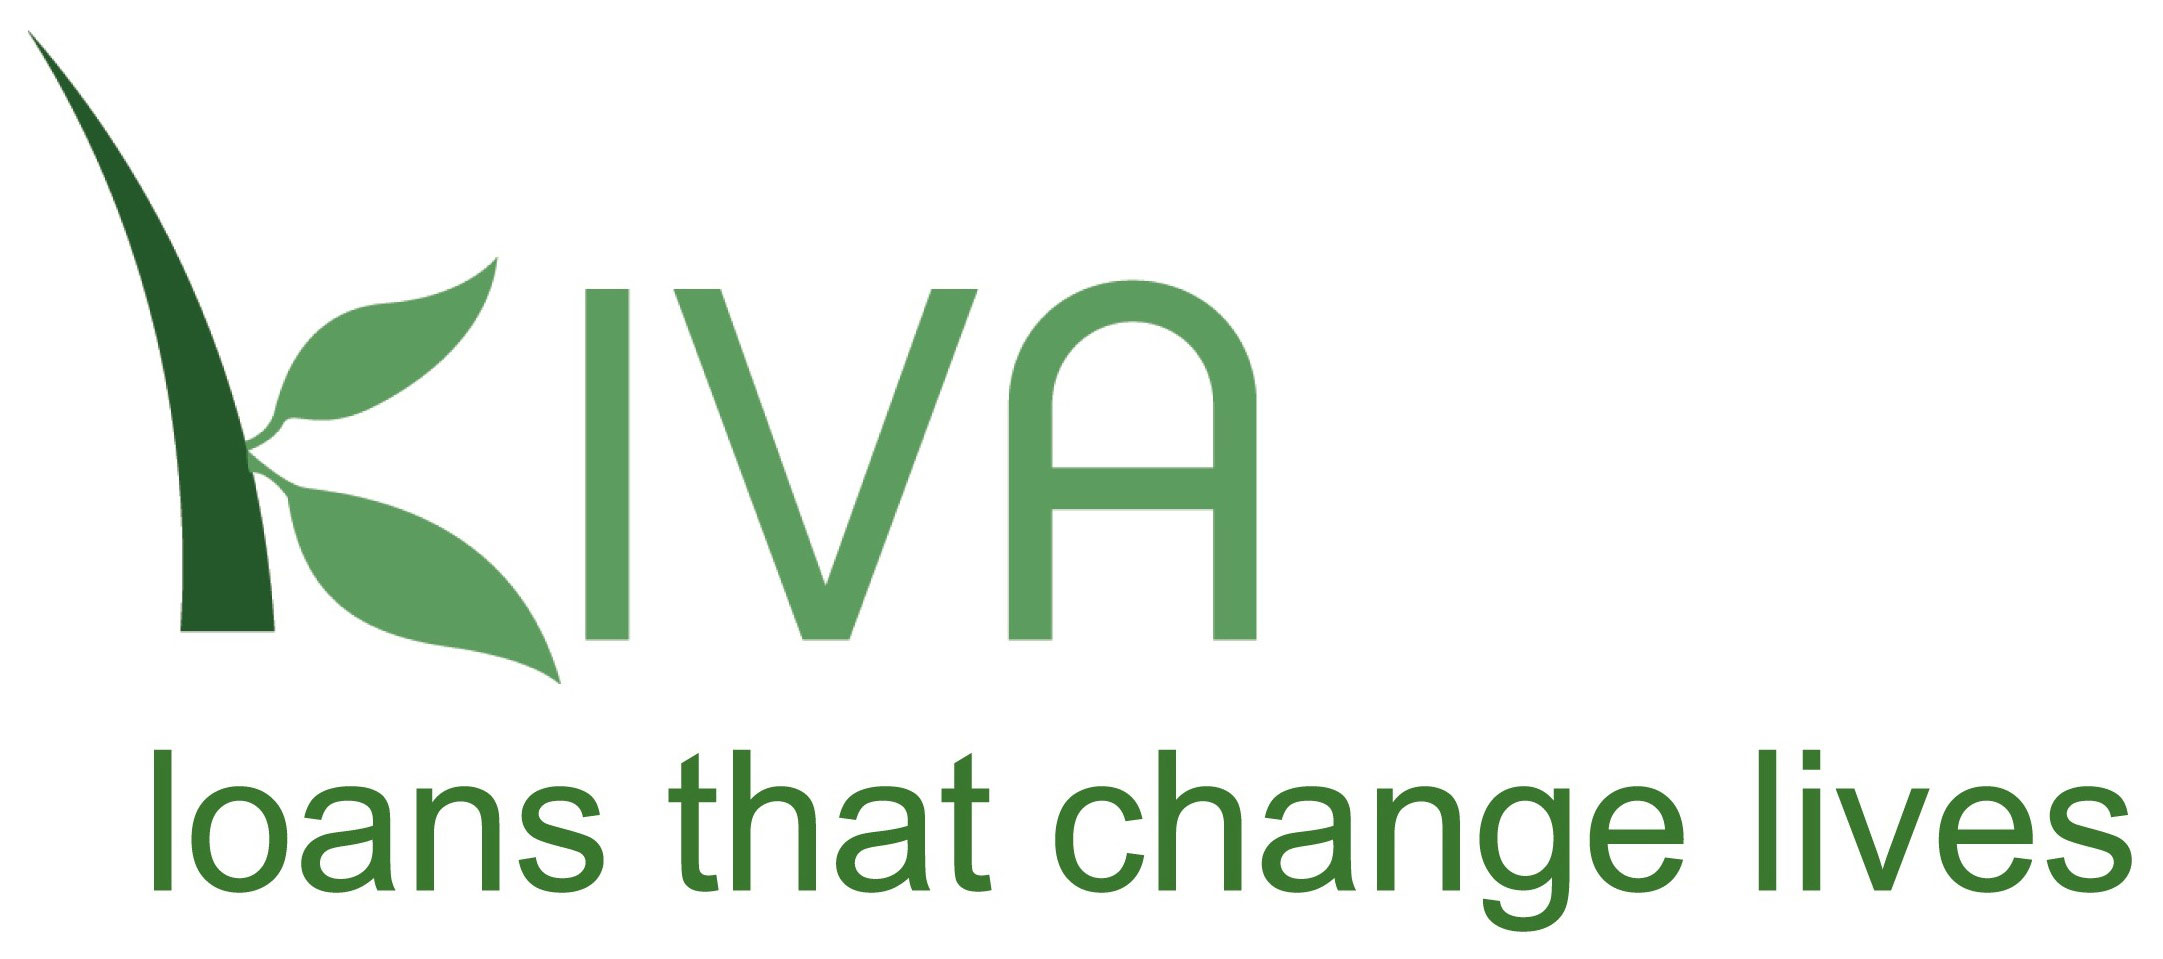 kiva.org logo